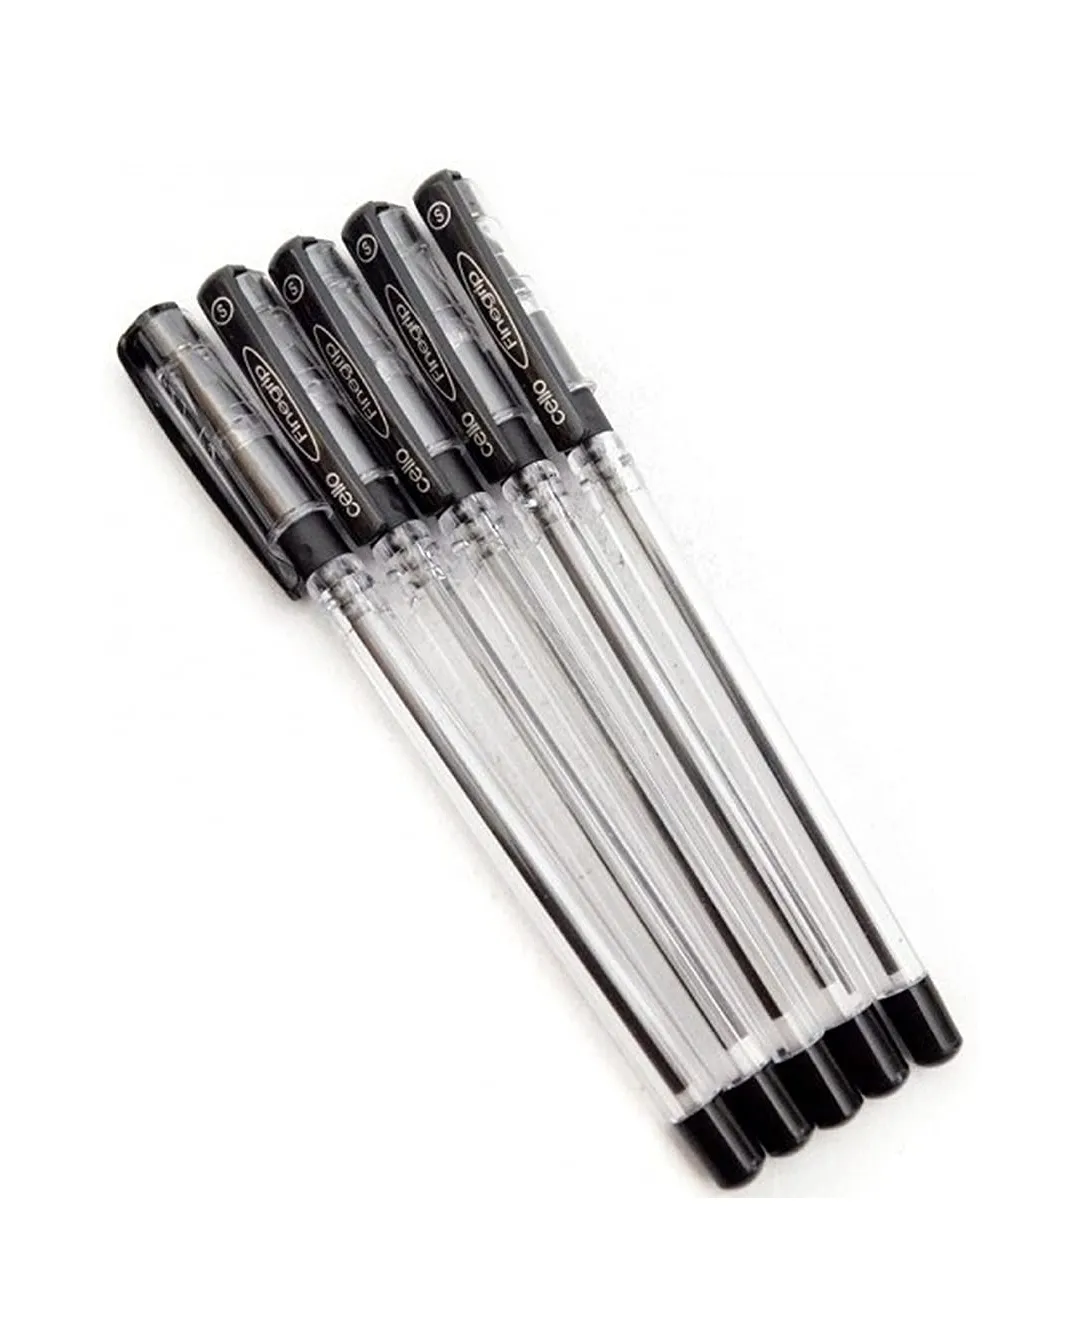 Cello Finegrip Ball Point Pen 0.7 mm Black Pen 1 Pack of 5 Pens